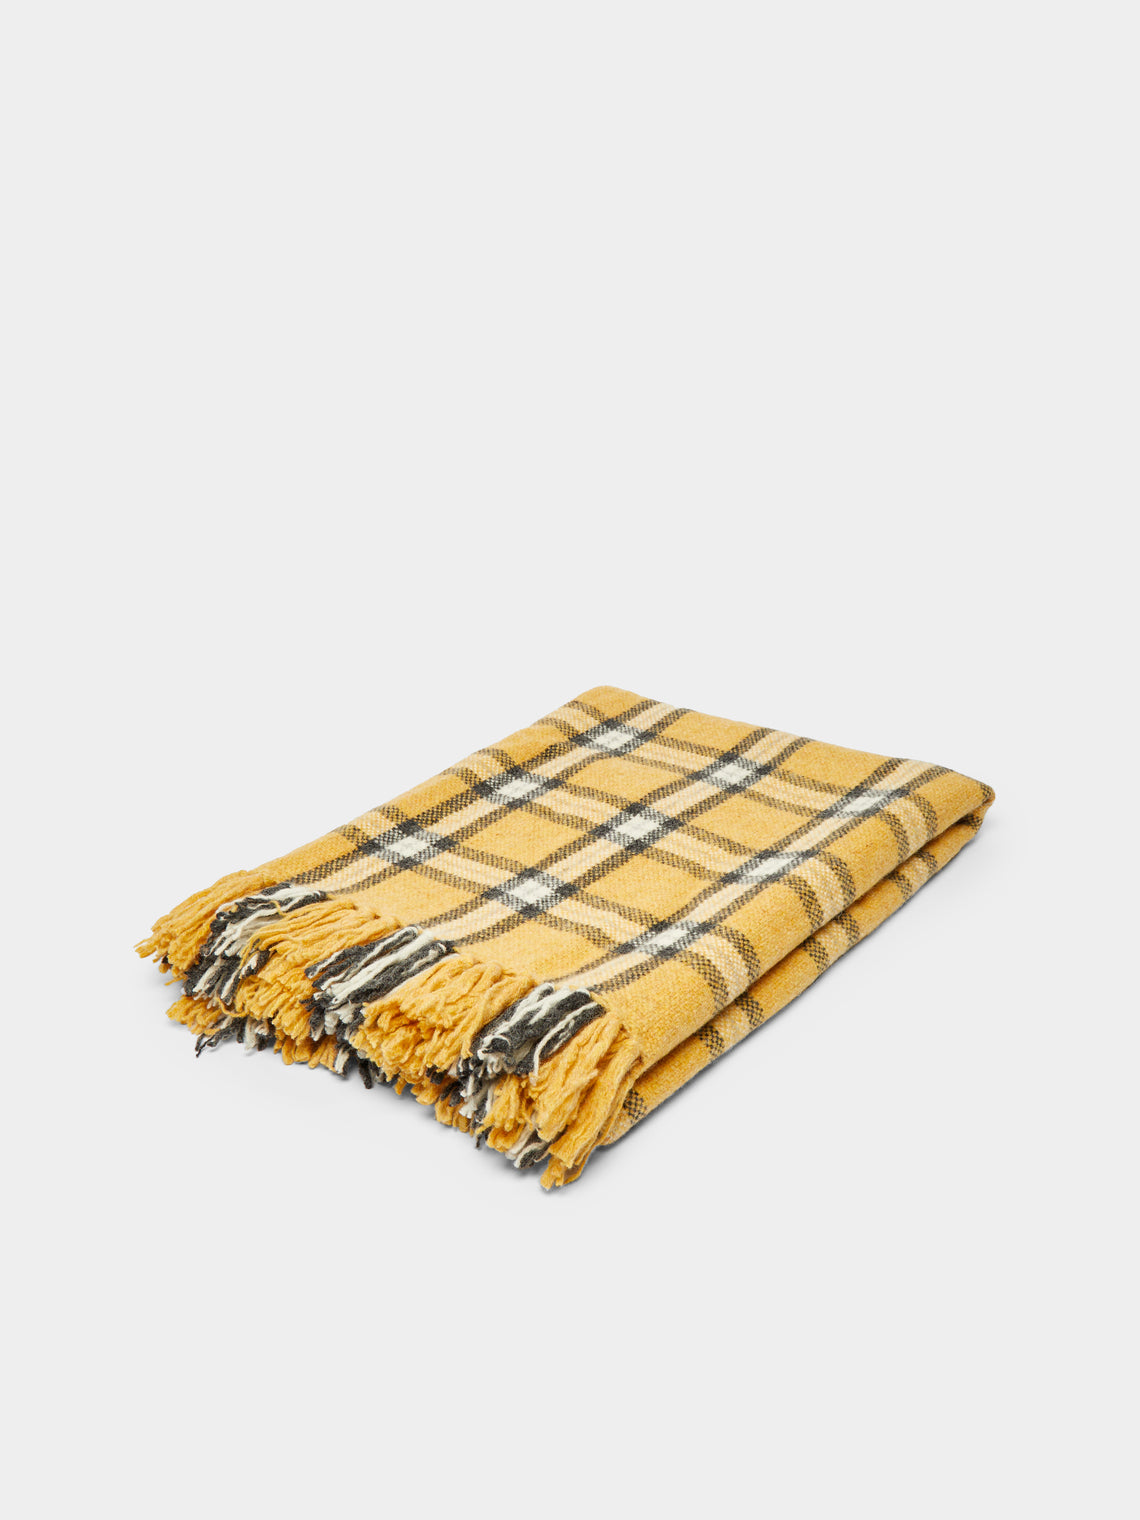 Hollie Ward - Archthine Shetland Wool Check Blanket -  - ABASK